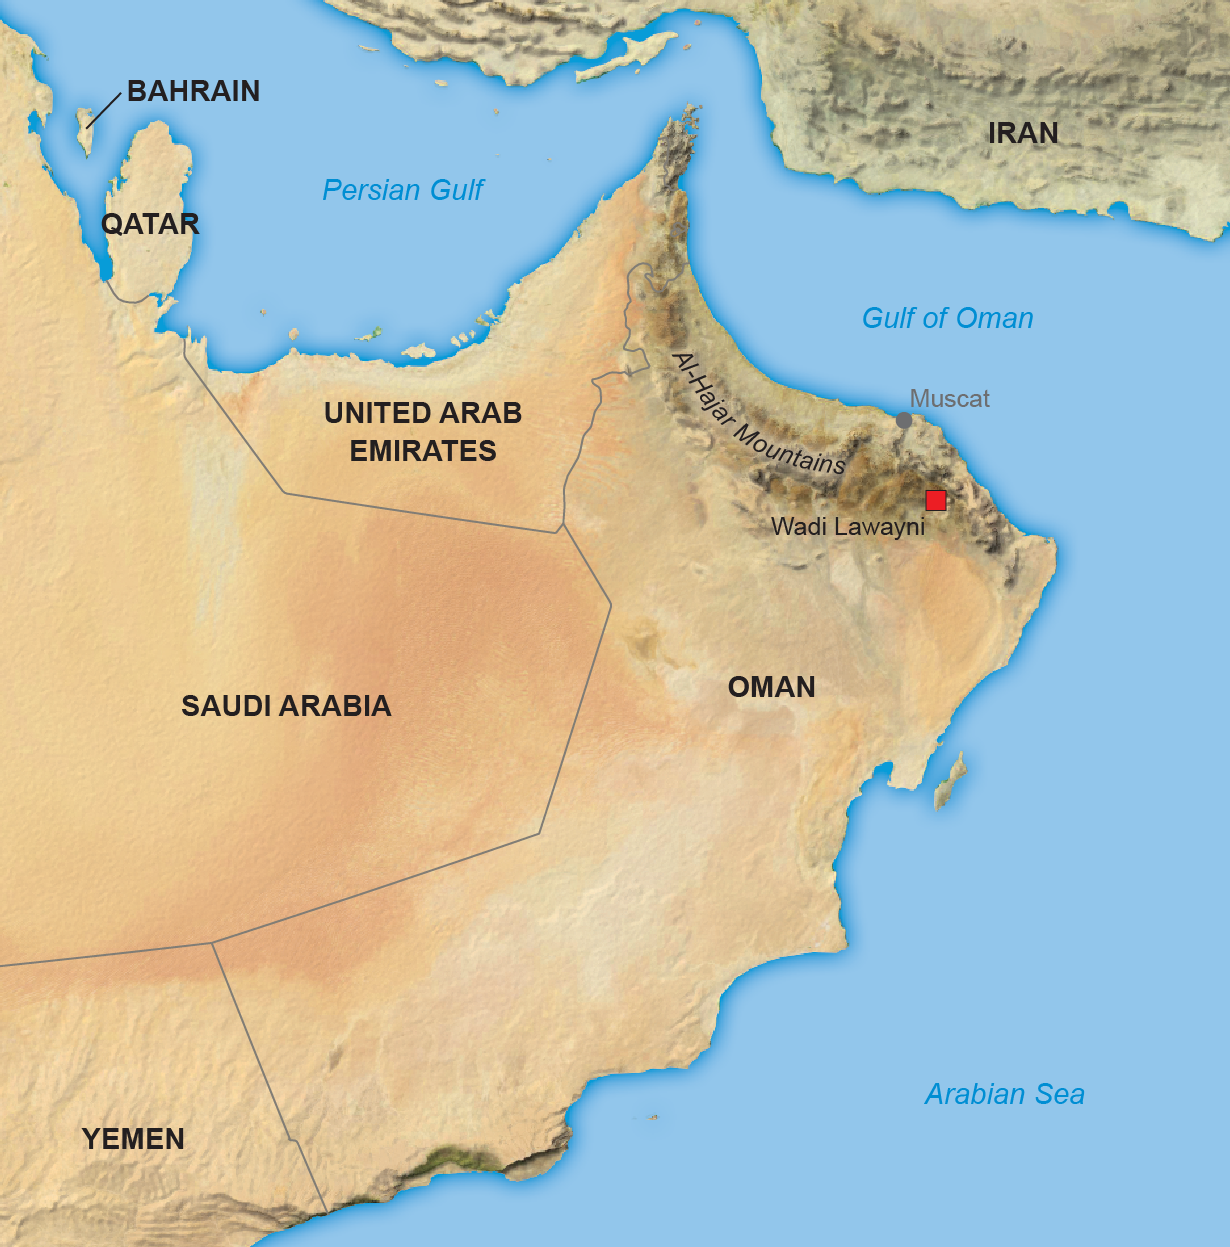 Map shows the location of the Wadi Lawayni desert and Al-Hajar mountain range in Oman.